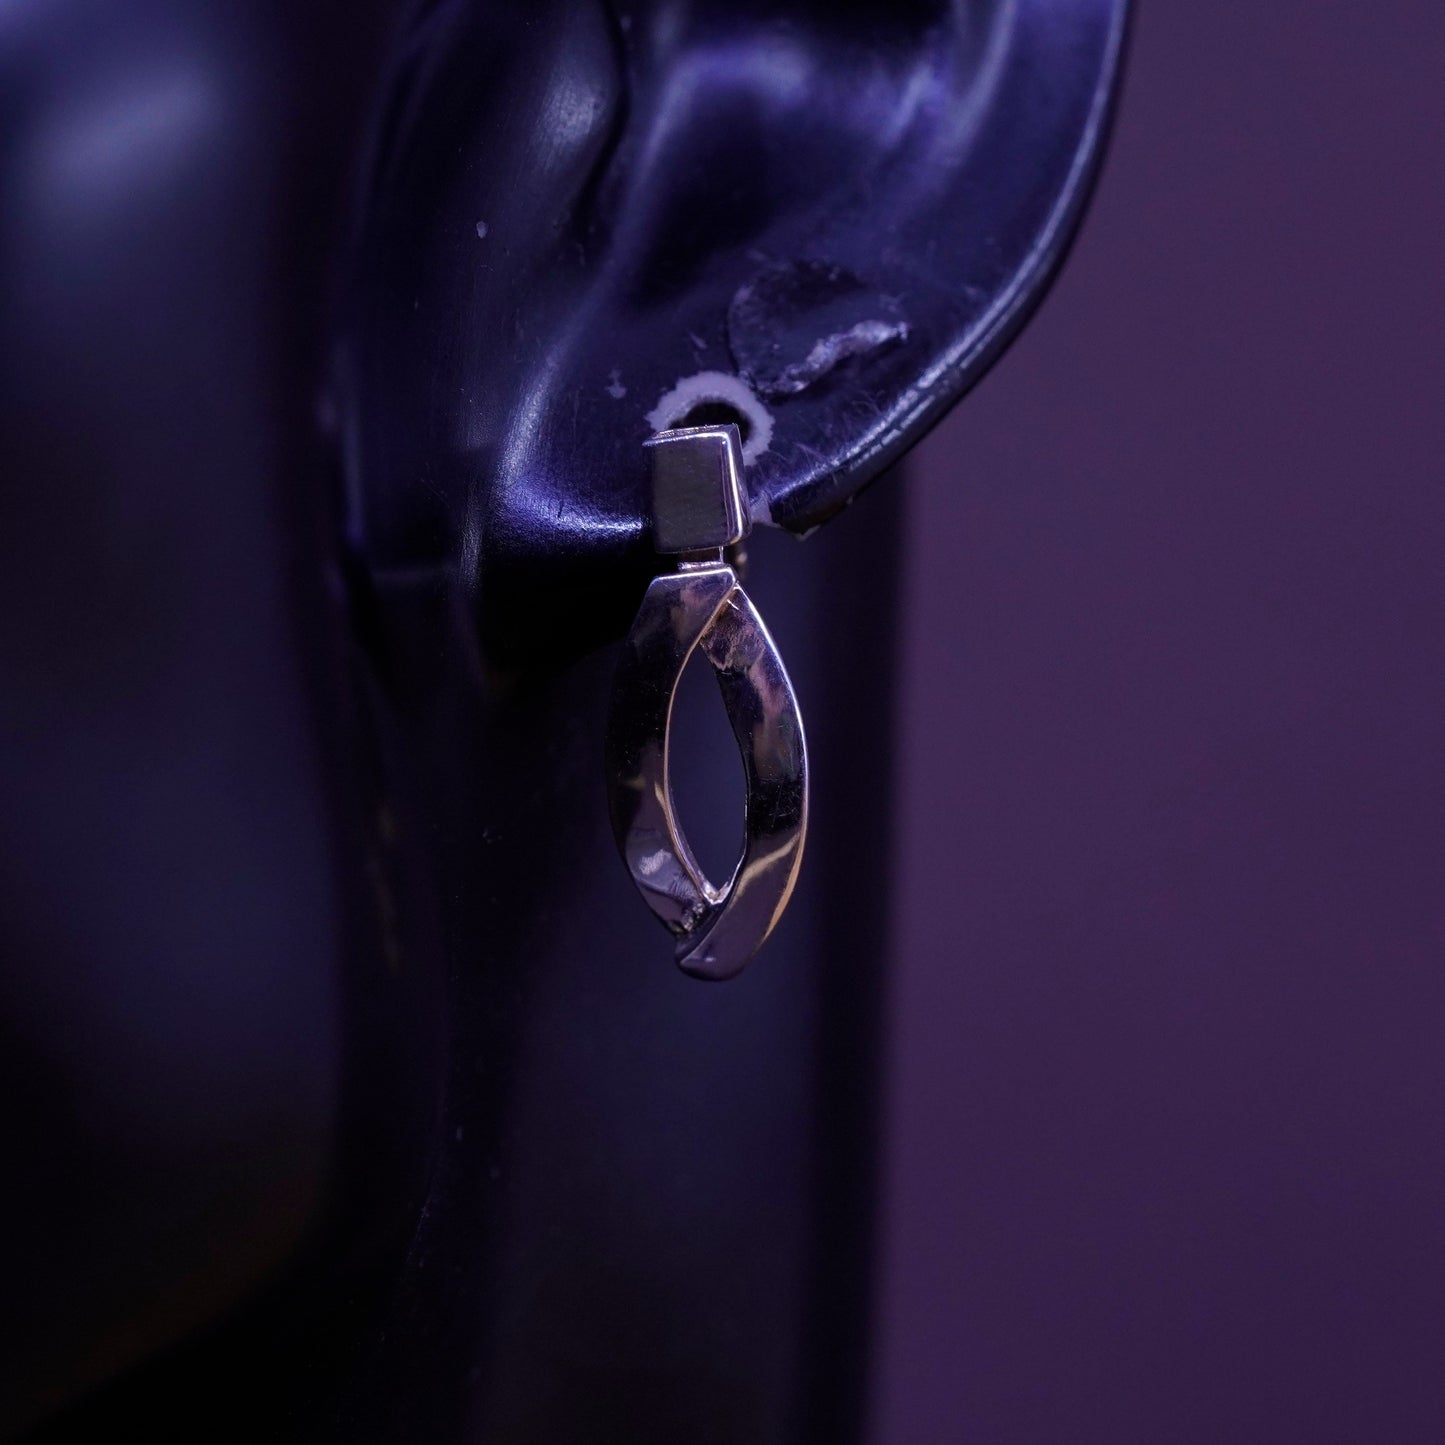 0.75”, Vintage Sterling silver handmade earrings, 925 teardrop drops